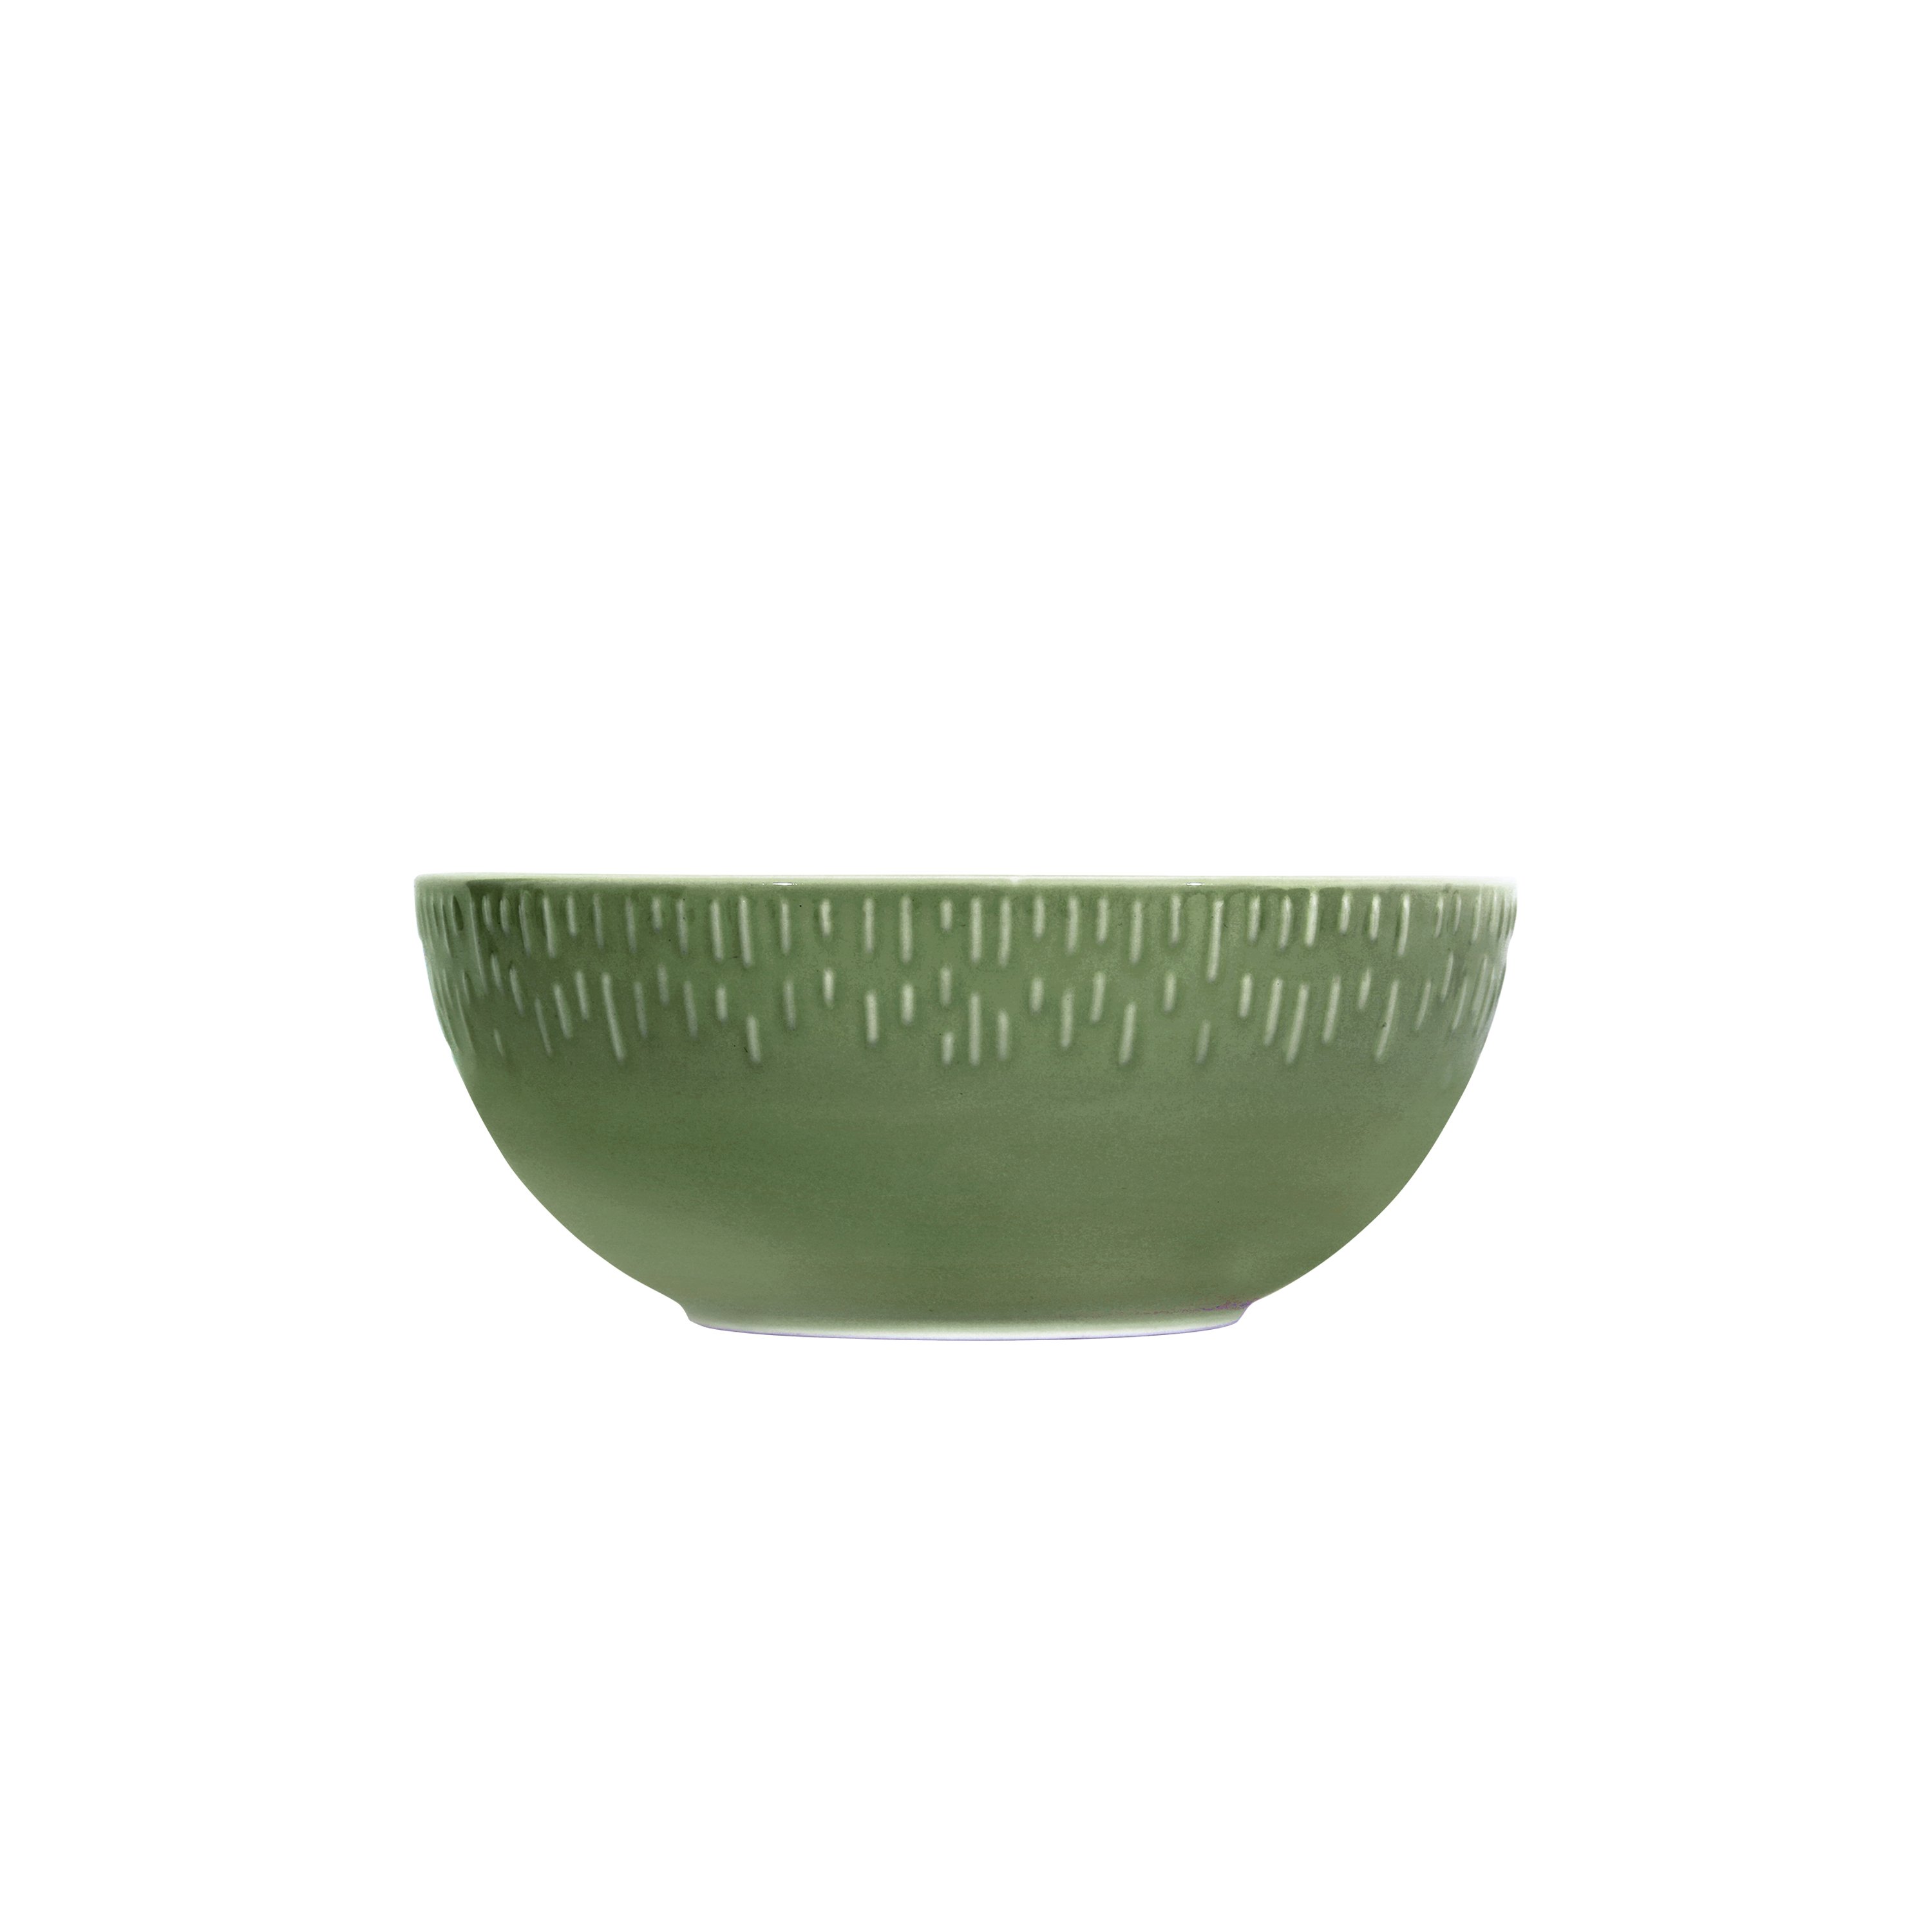 Aida - Life in Colour - Confetti - Olive saladbowl w/relief porcelain (13410) - Hjemme og kjøkken